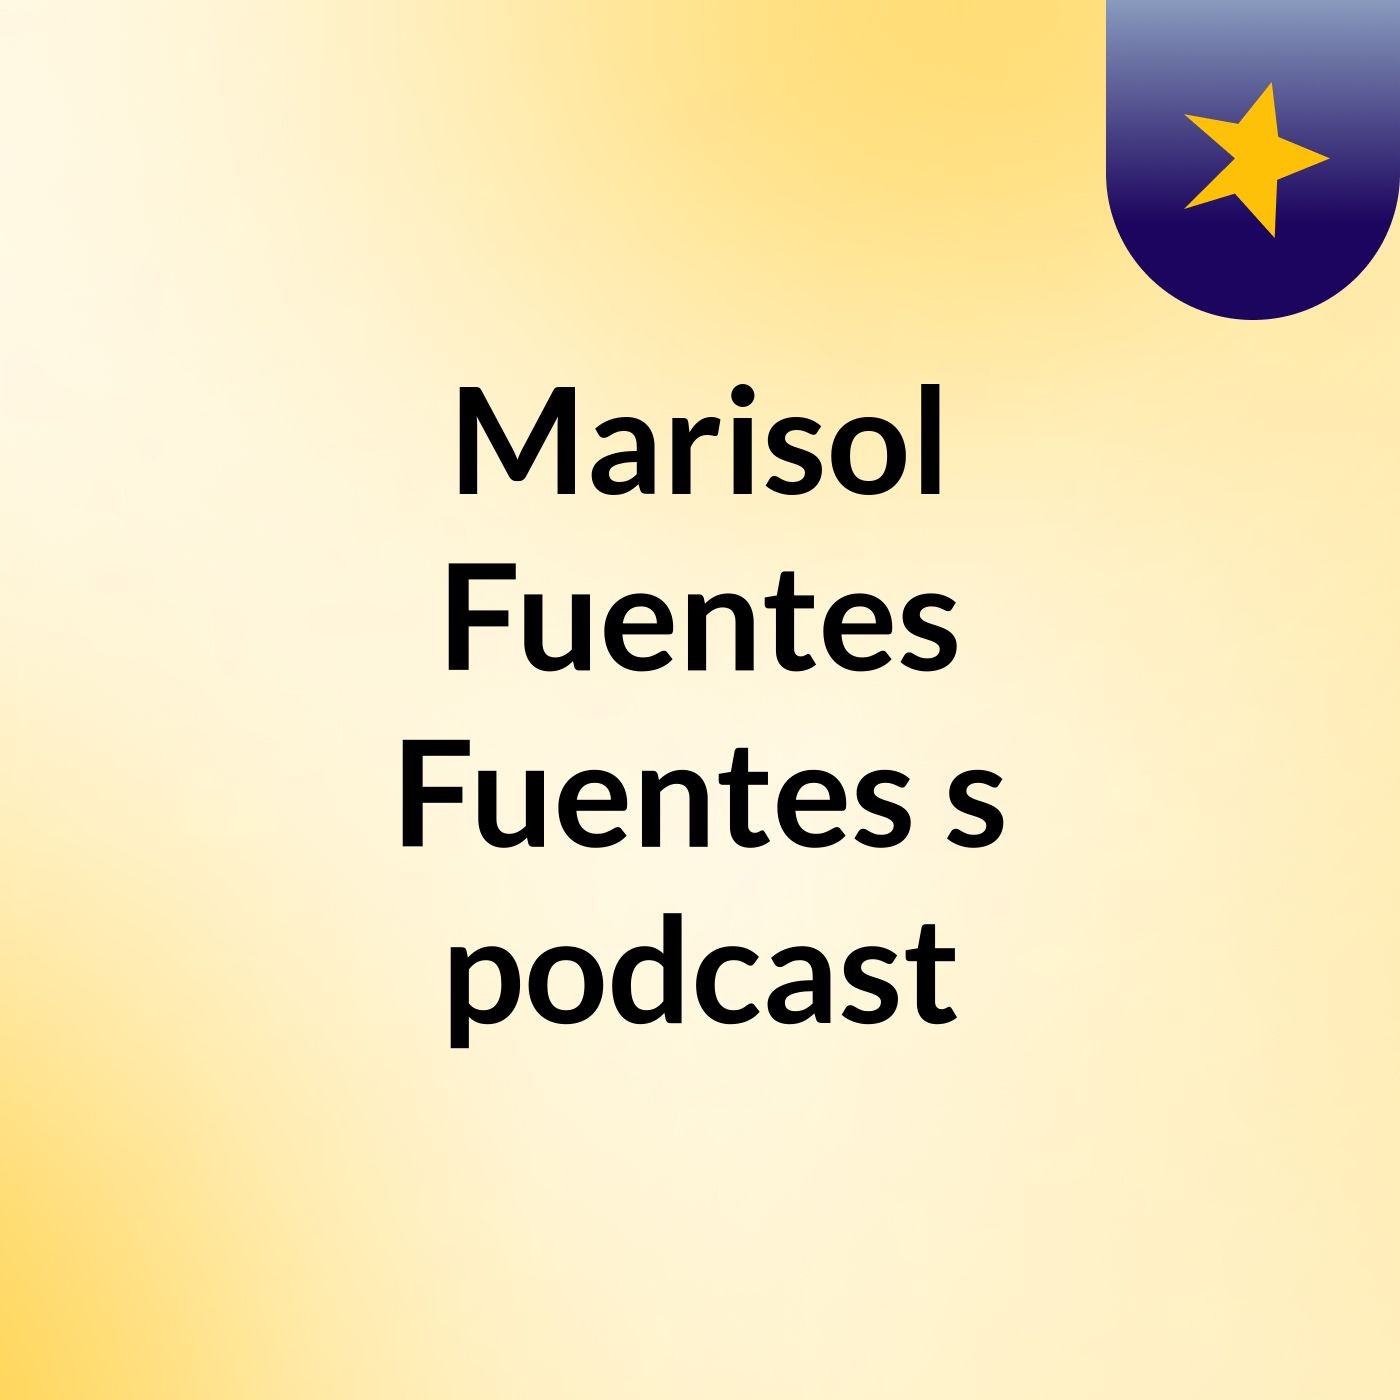 Marisol Fuentes Fuentes's podcast